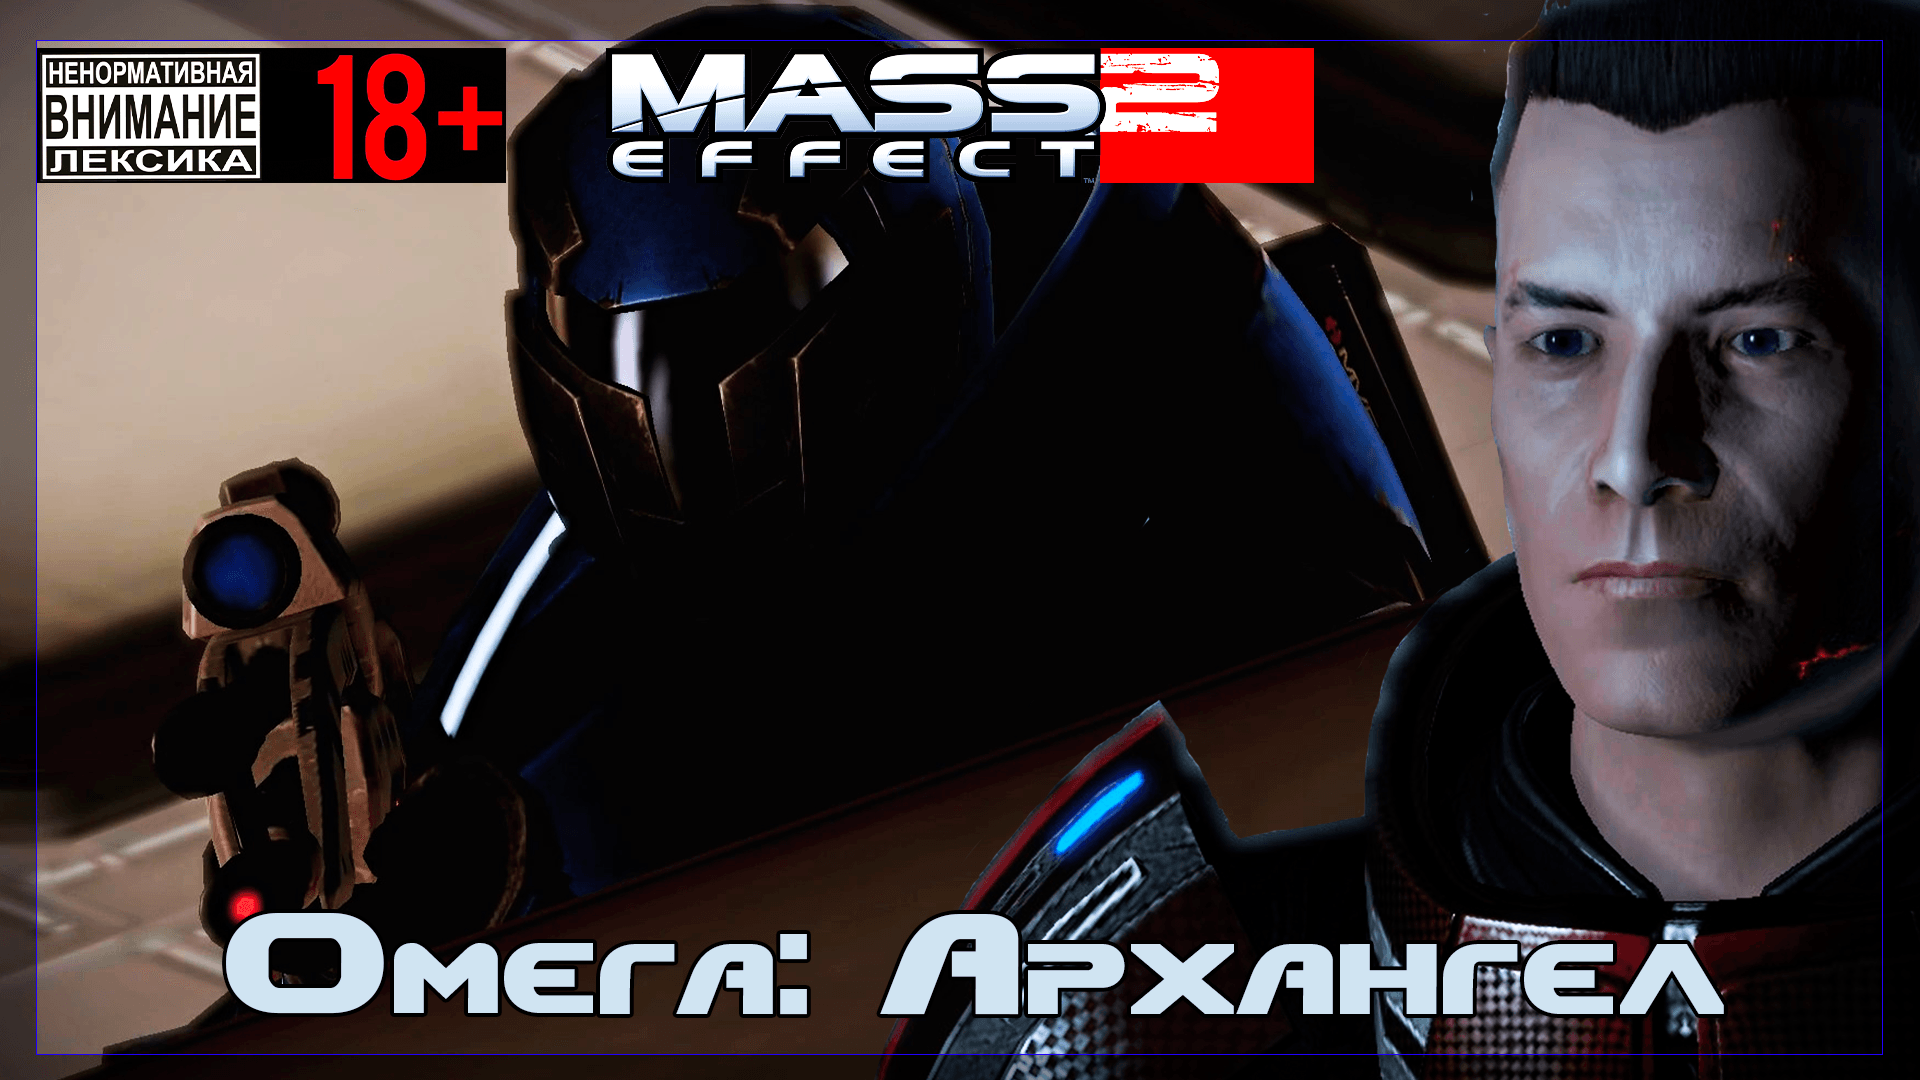 Mass Effect 2 / Original #12 Омега: Архангел